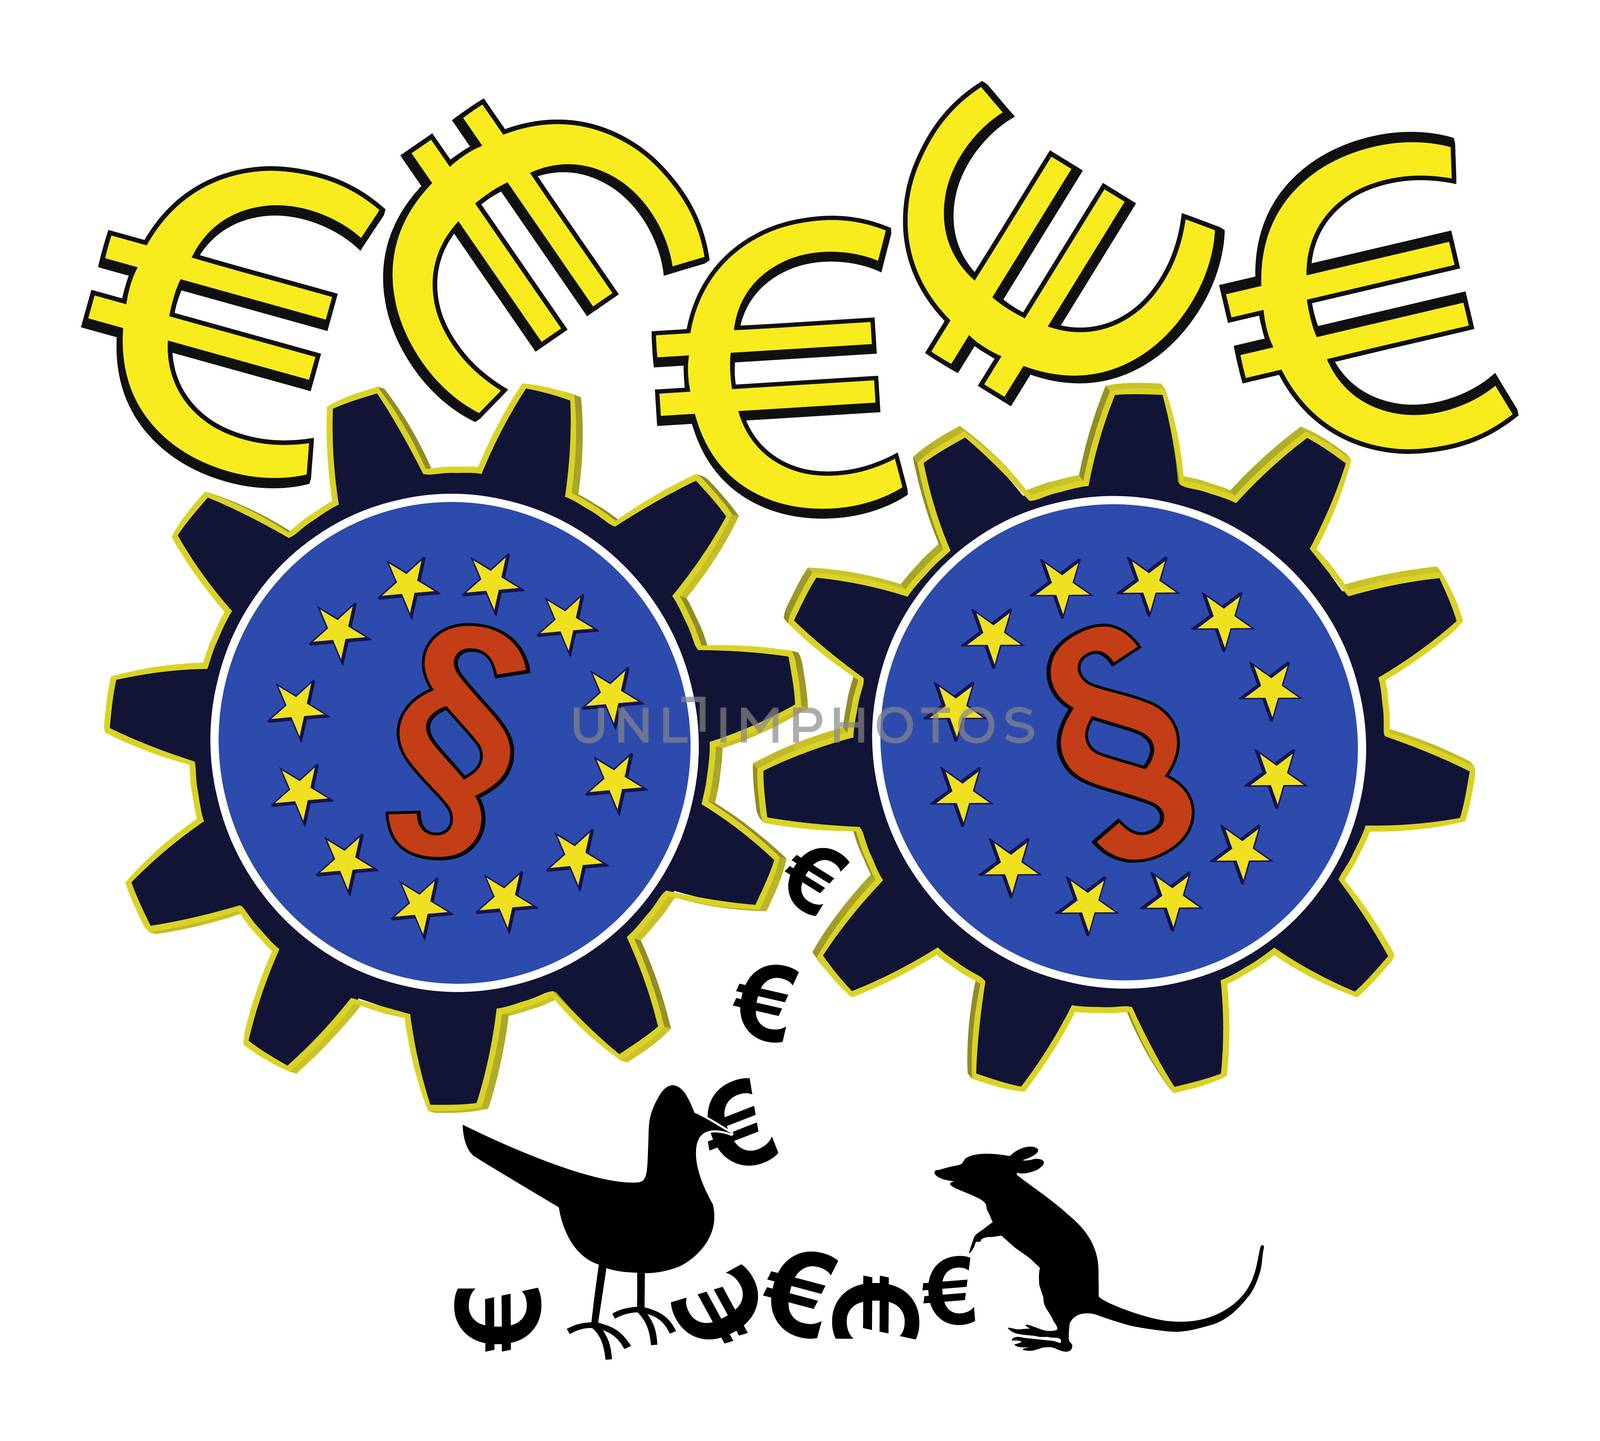 EU is wasting Money by Bambara